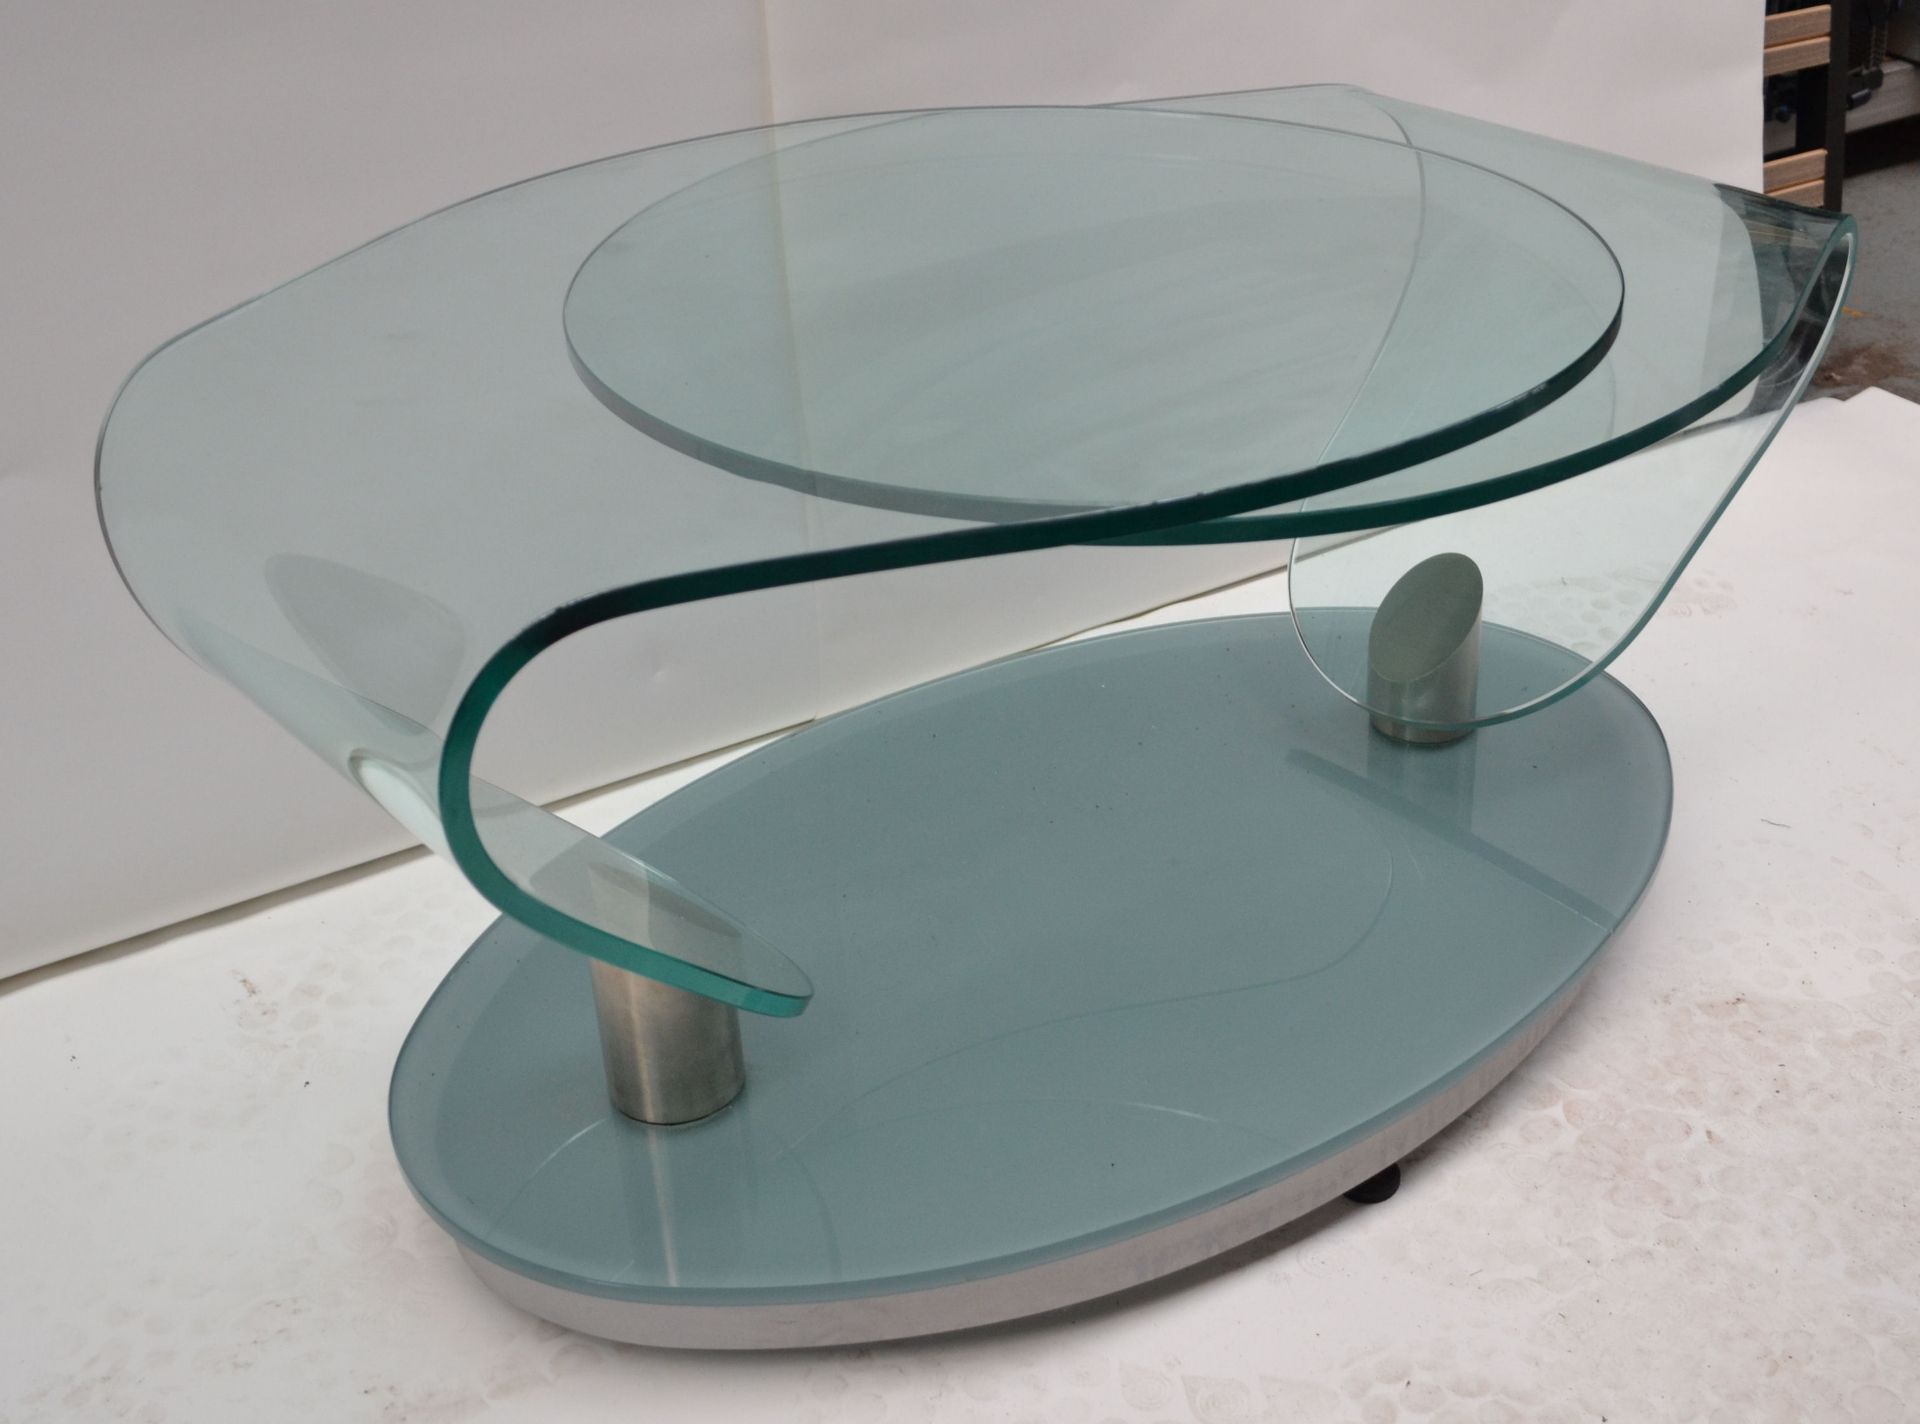 1 x Contemporary Swivelling Glass Coffee Table - AE007 - CL007 - Location: Altrincham WA14 - NO VAT